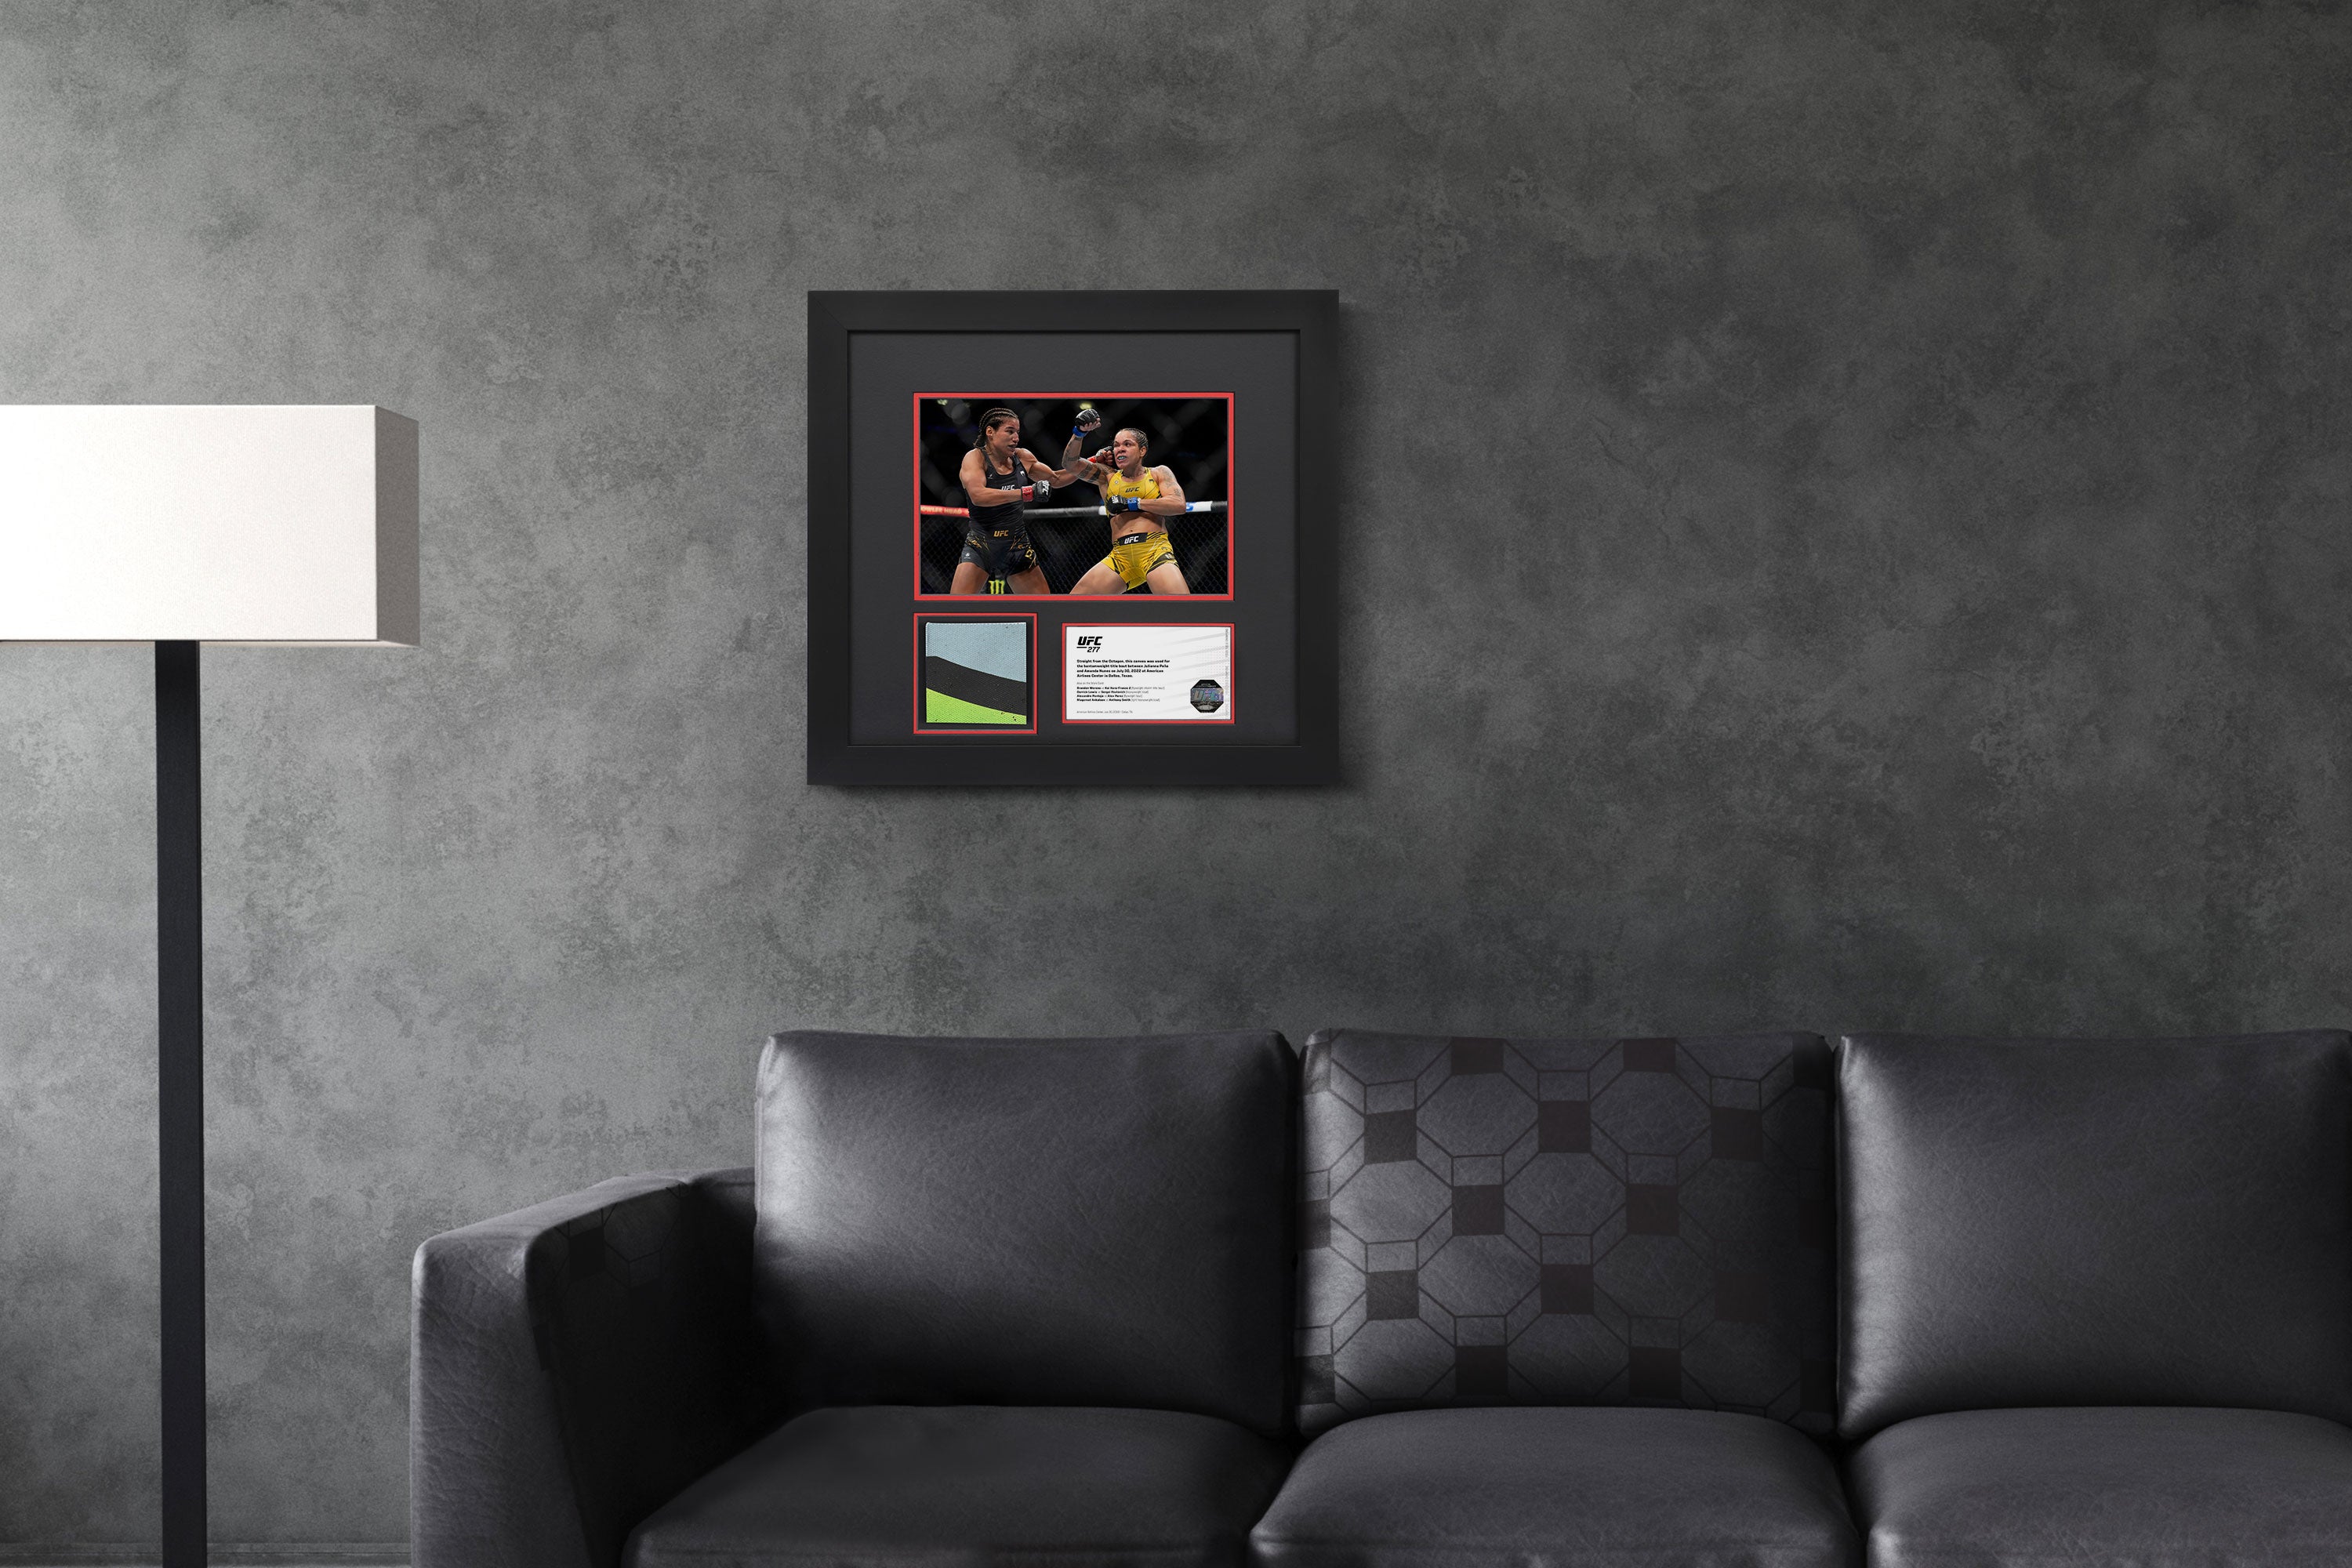 UFC 277: Pena vs Nunes 2 Canvas & Photo